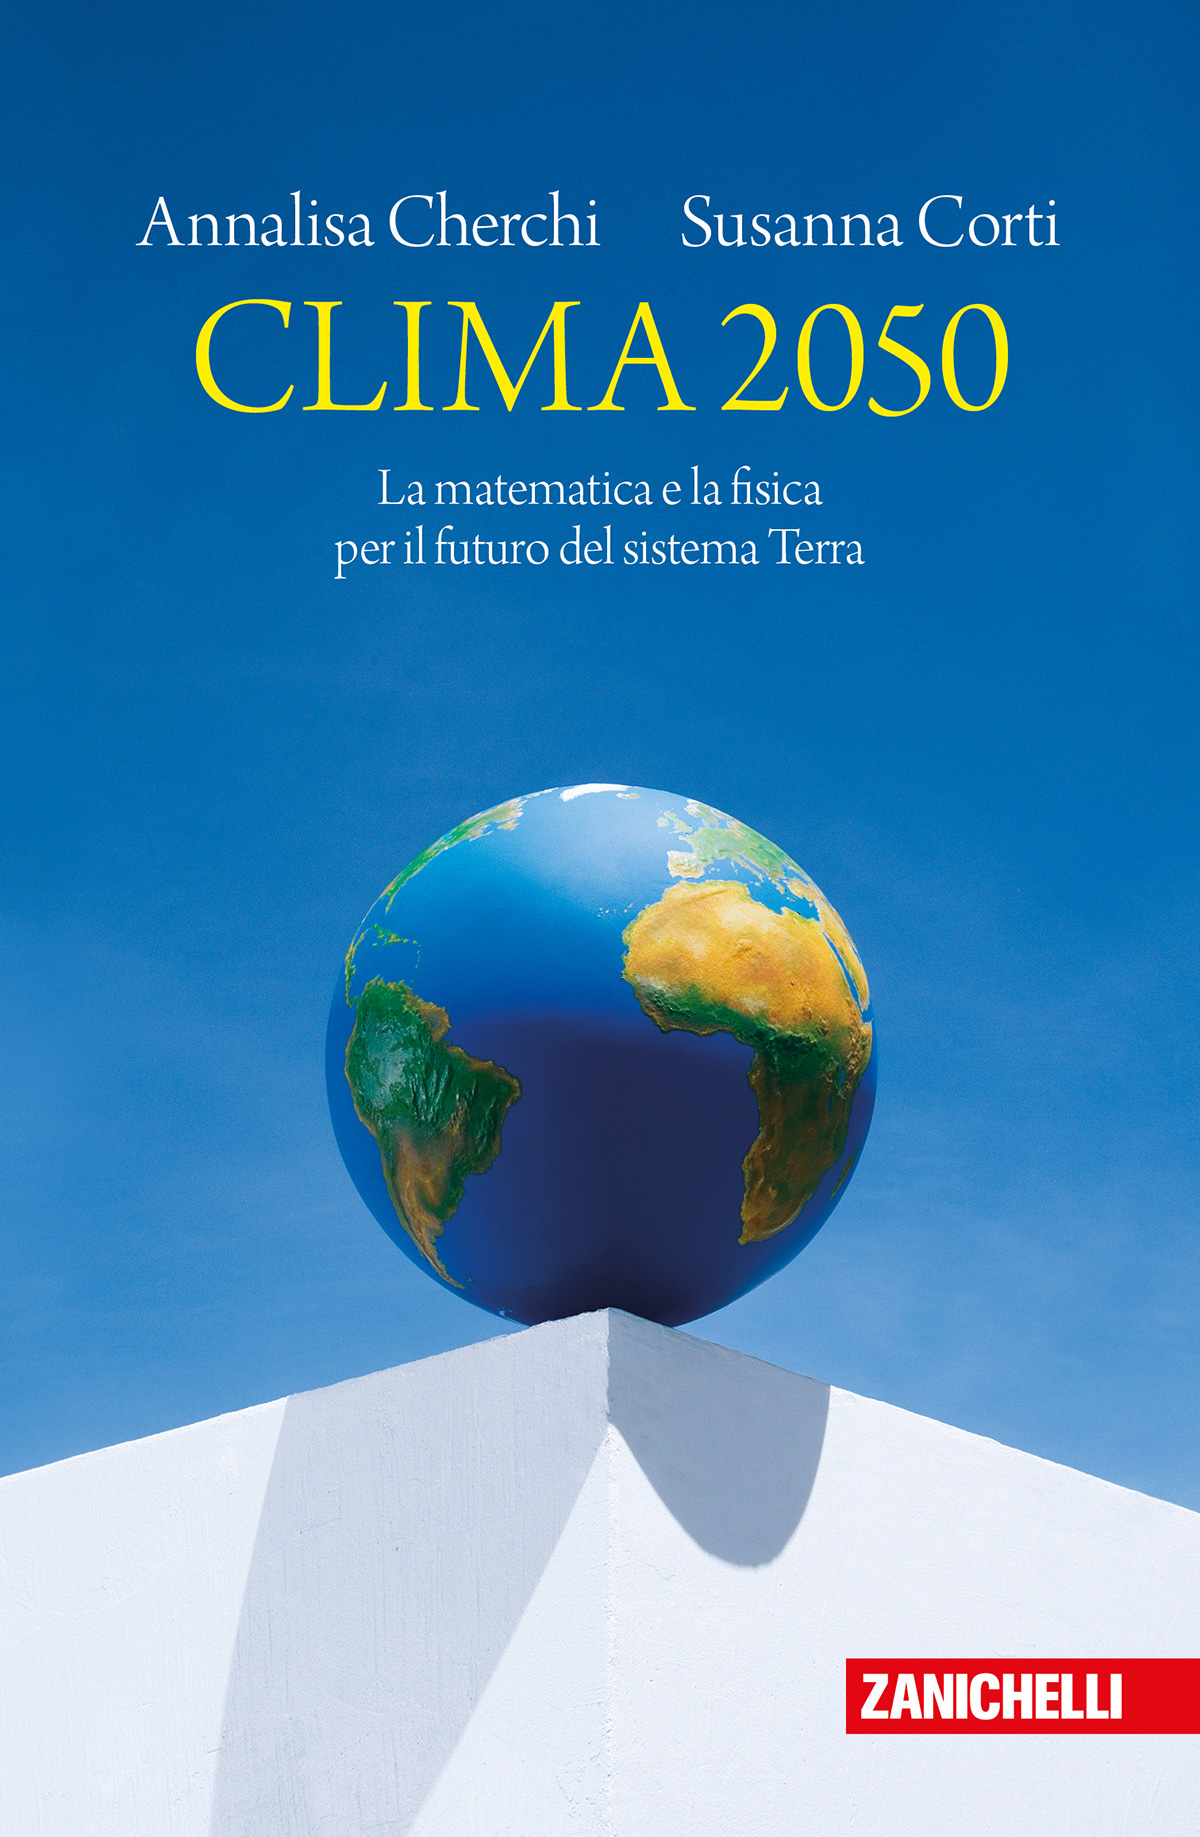 Annalisa Cherchi, Susanna Corti - Clima 2050